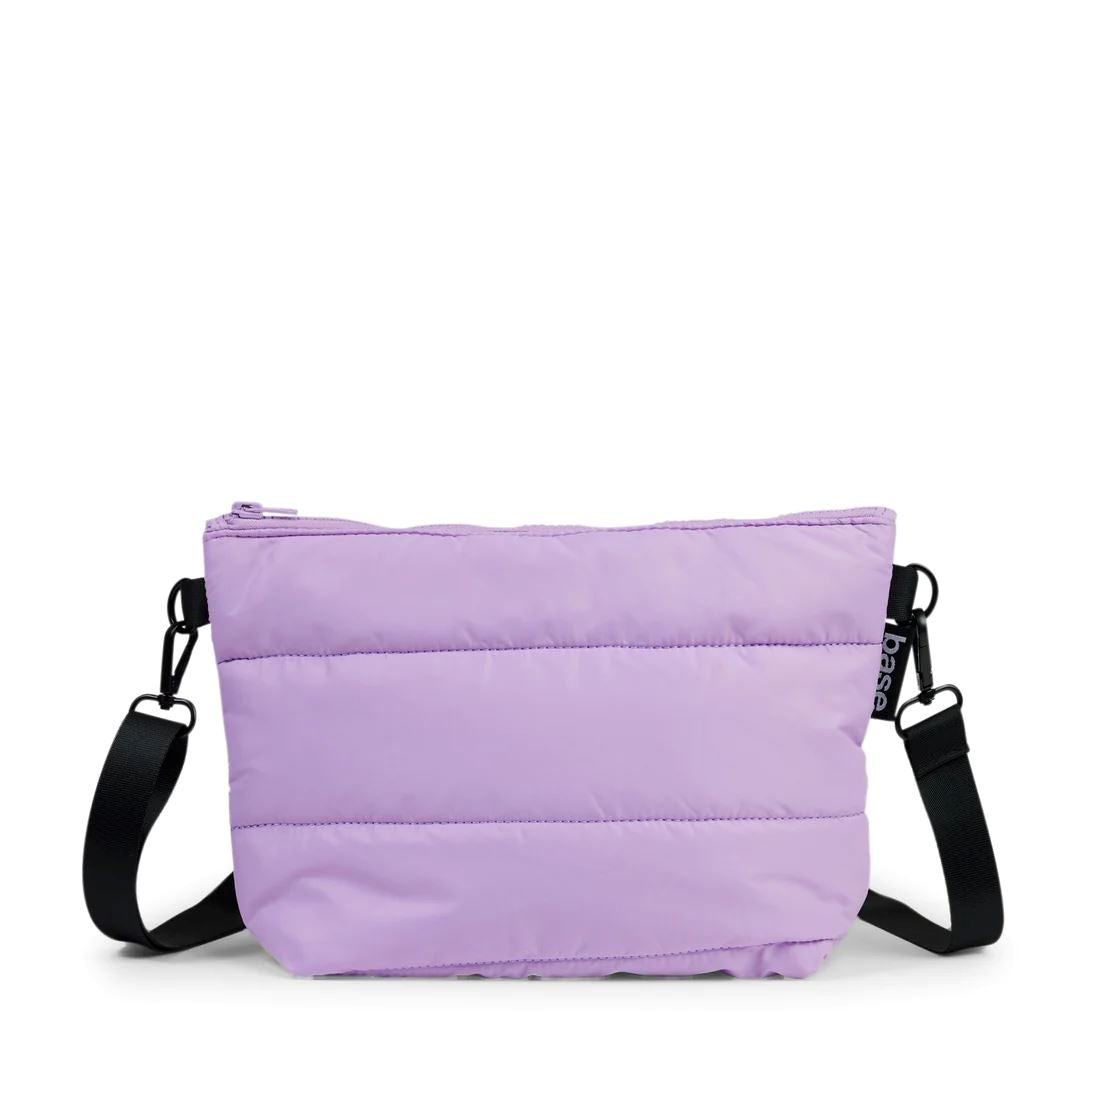 Similar Products To #BRAXLEY Stash Bag Lilac Purple OS